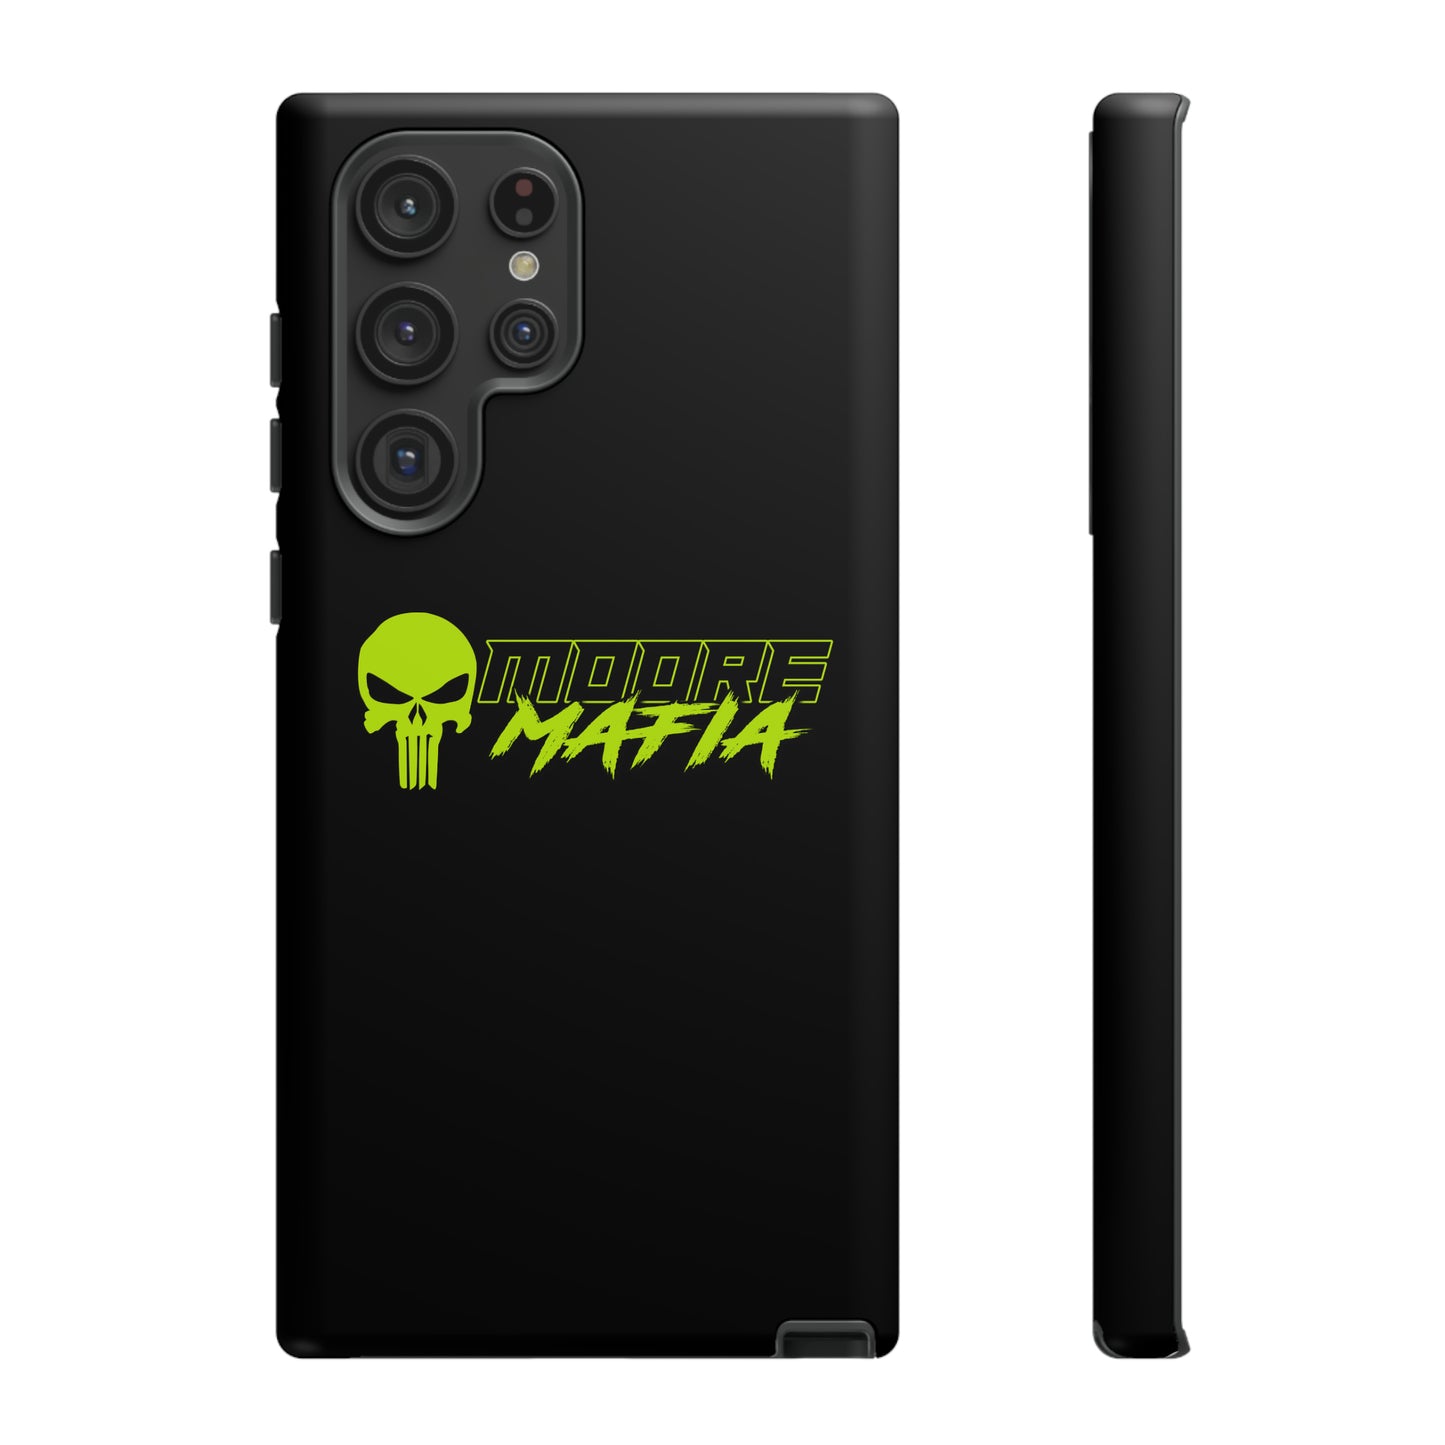 Moore Mafia Phone Cases